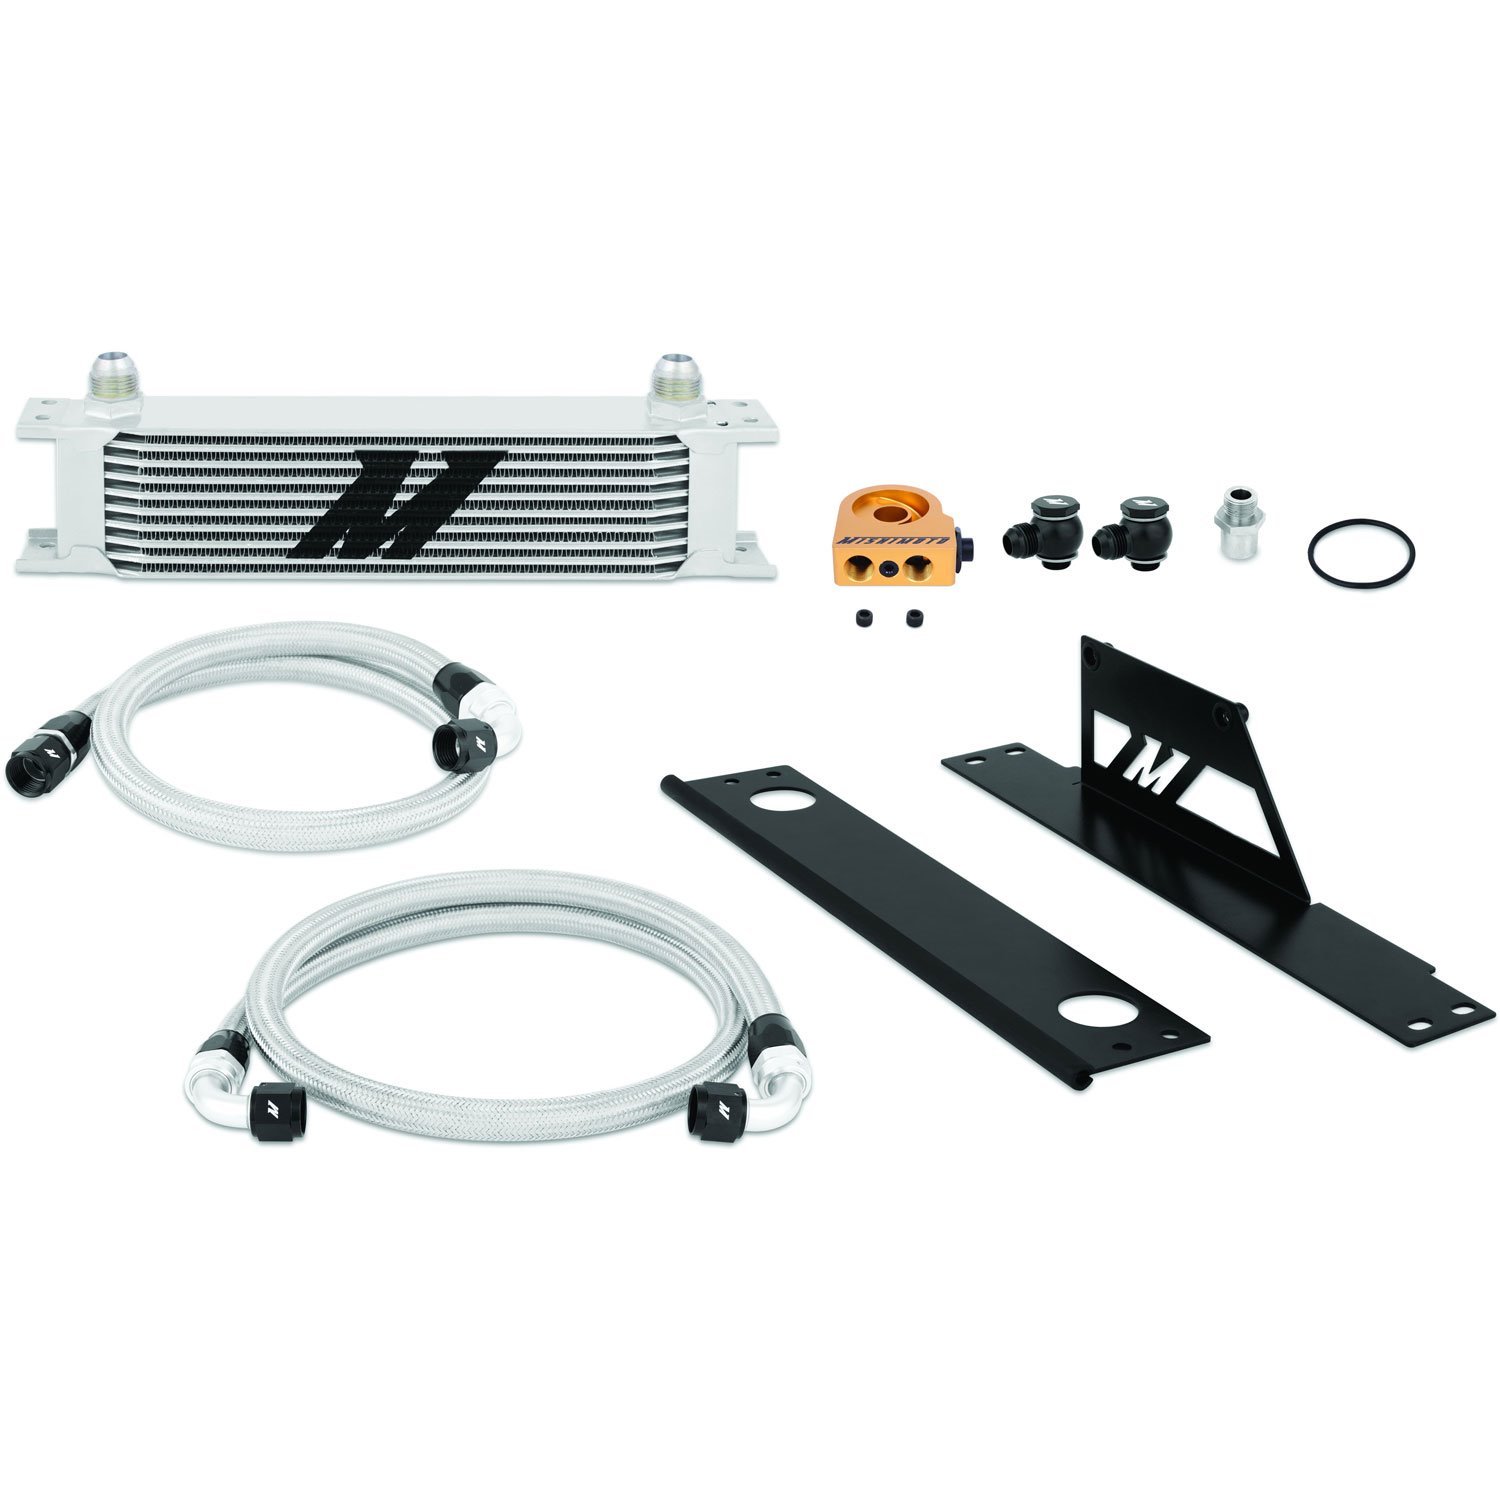 Subaru WRX and STI Thermostatic Oil Cooler Kit